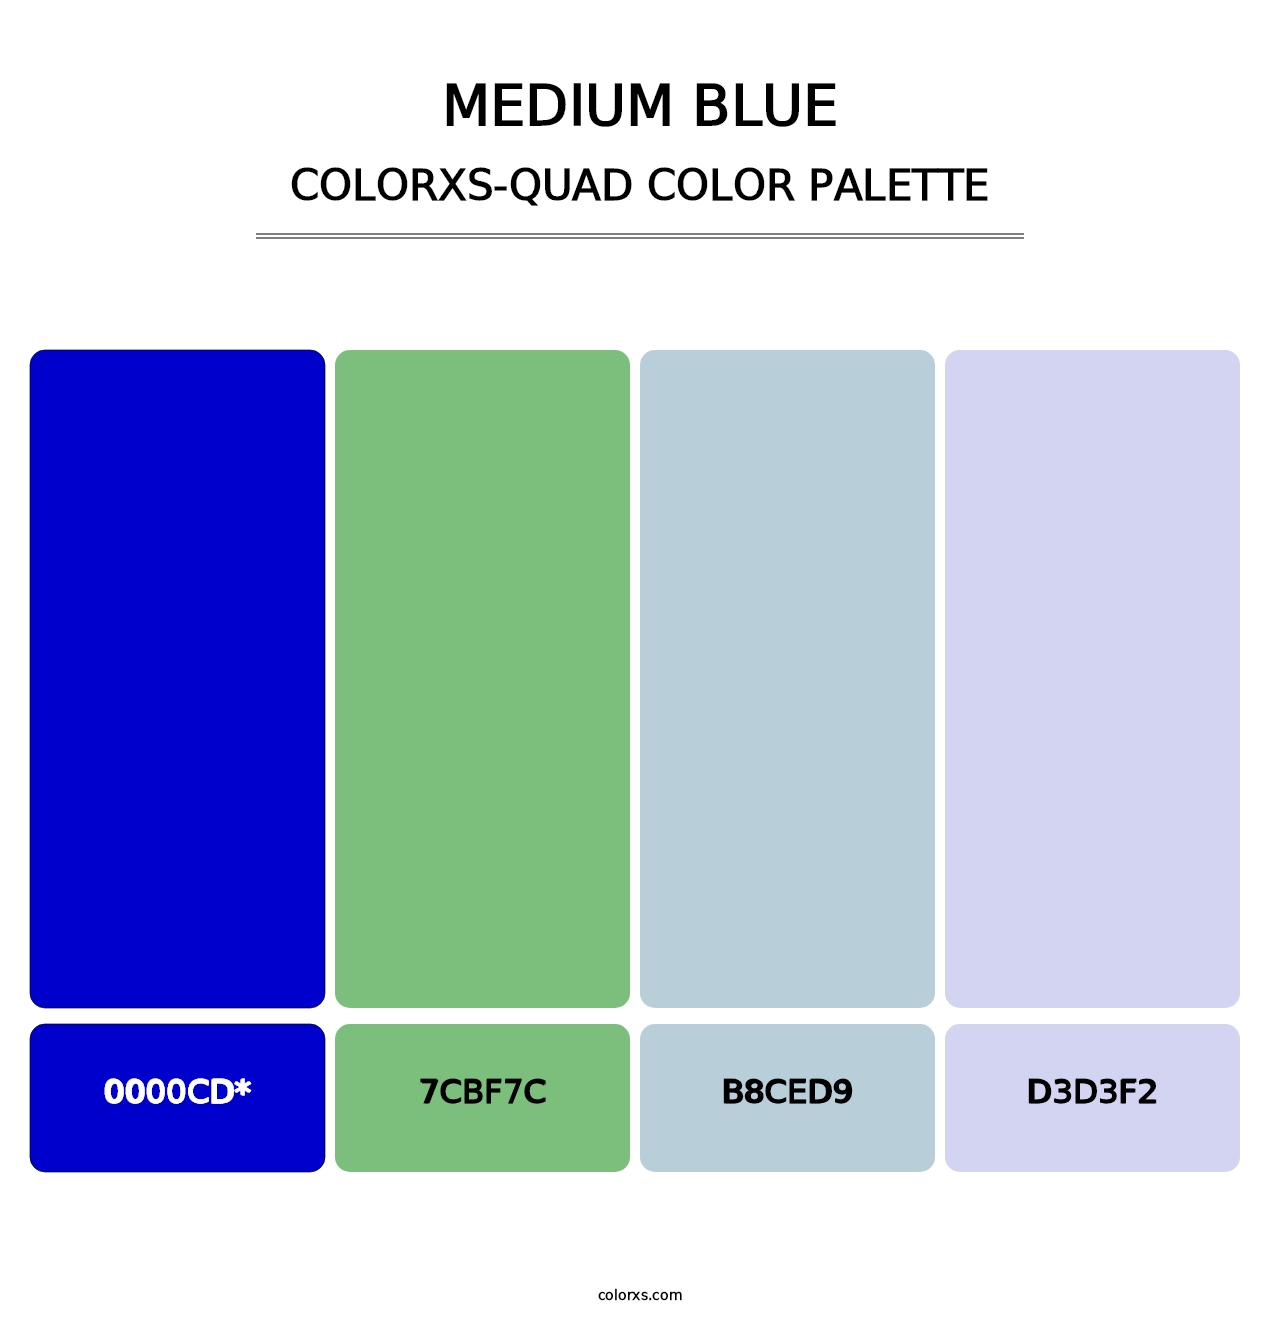 Medium Blue - Colorxs Quad Palette